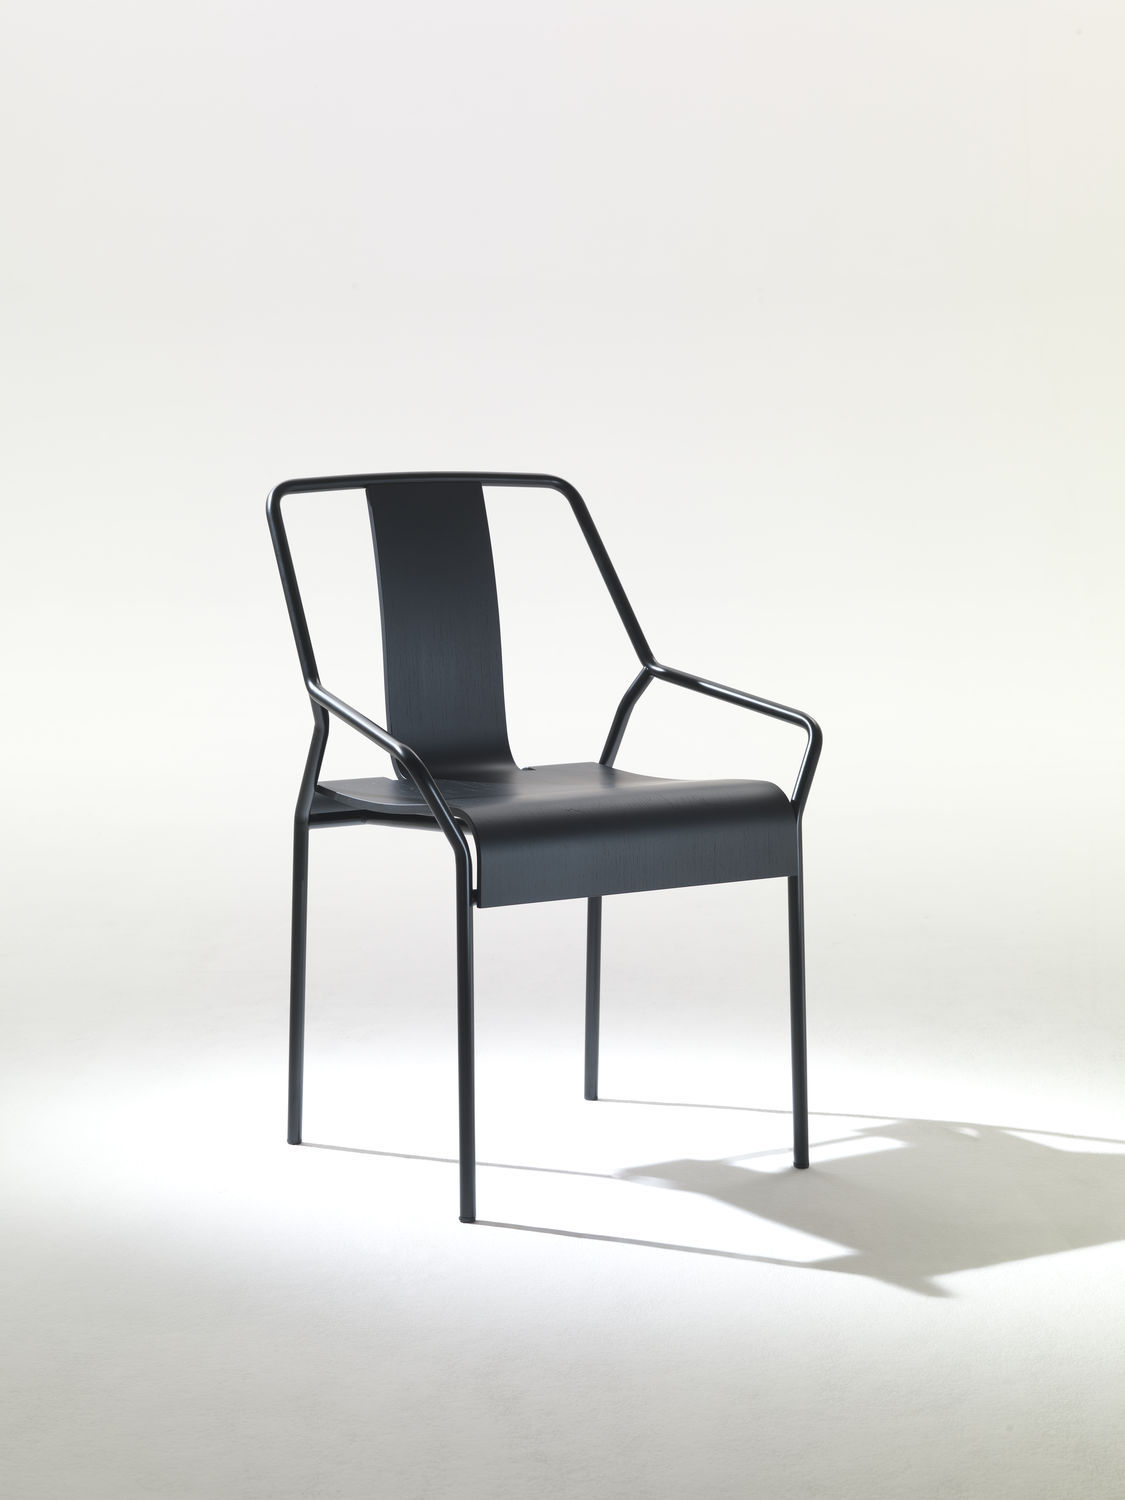 Dao Chair by Shin Azumi